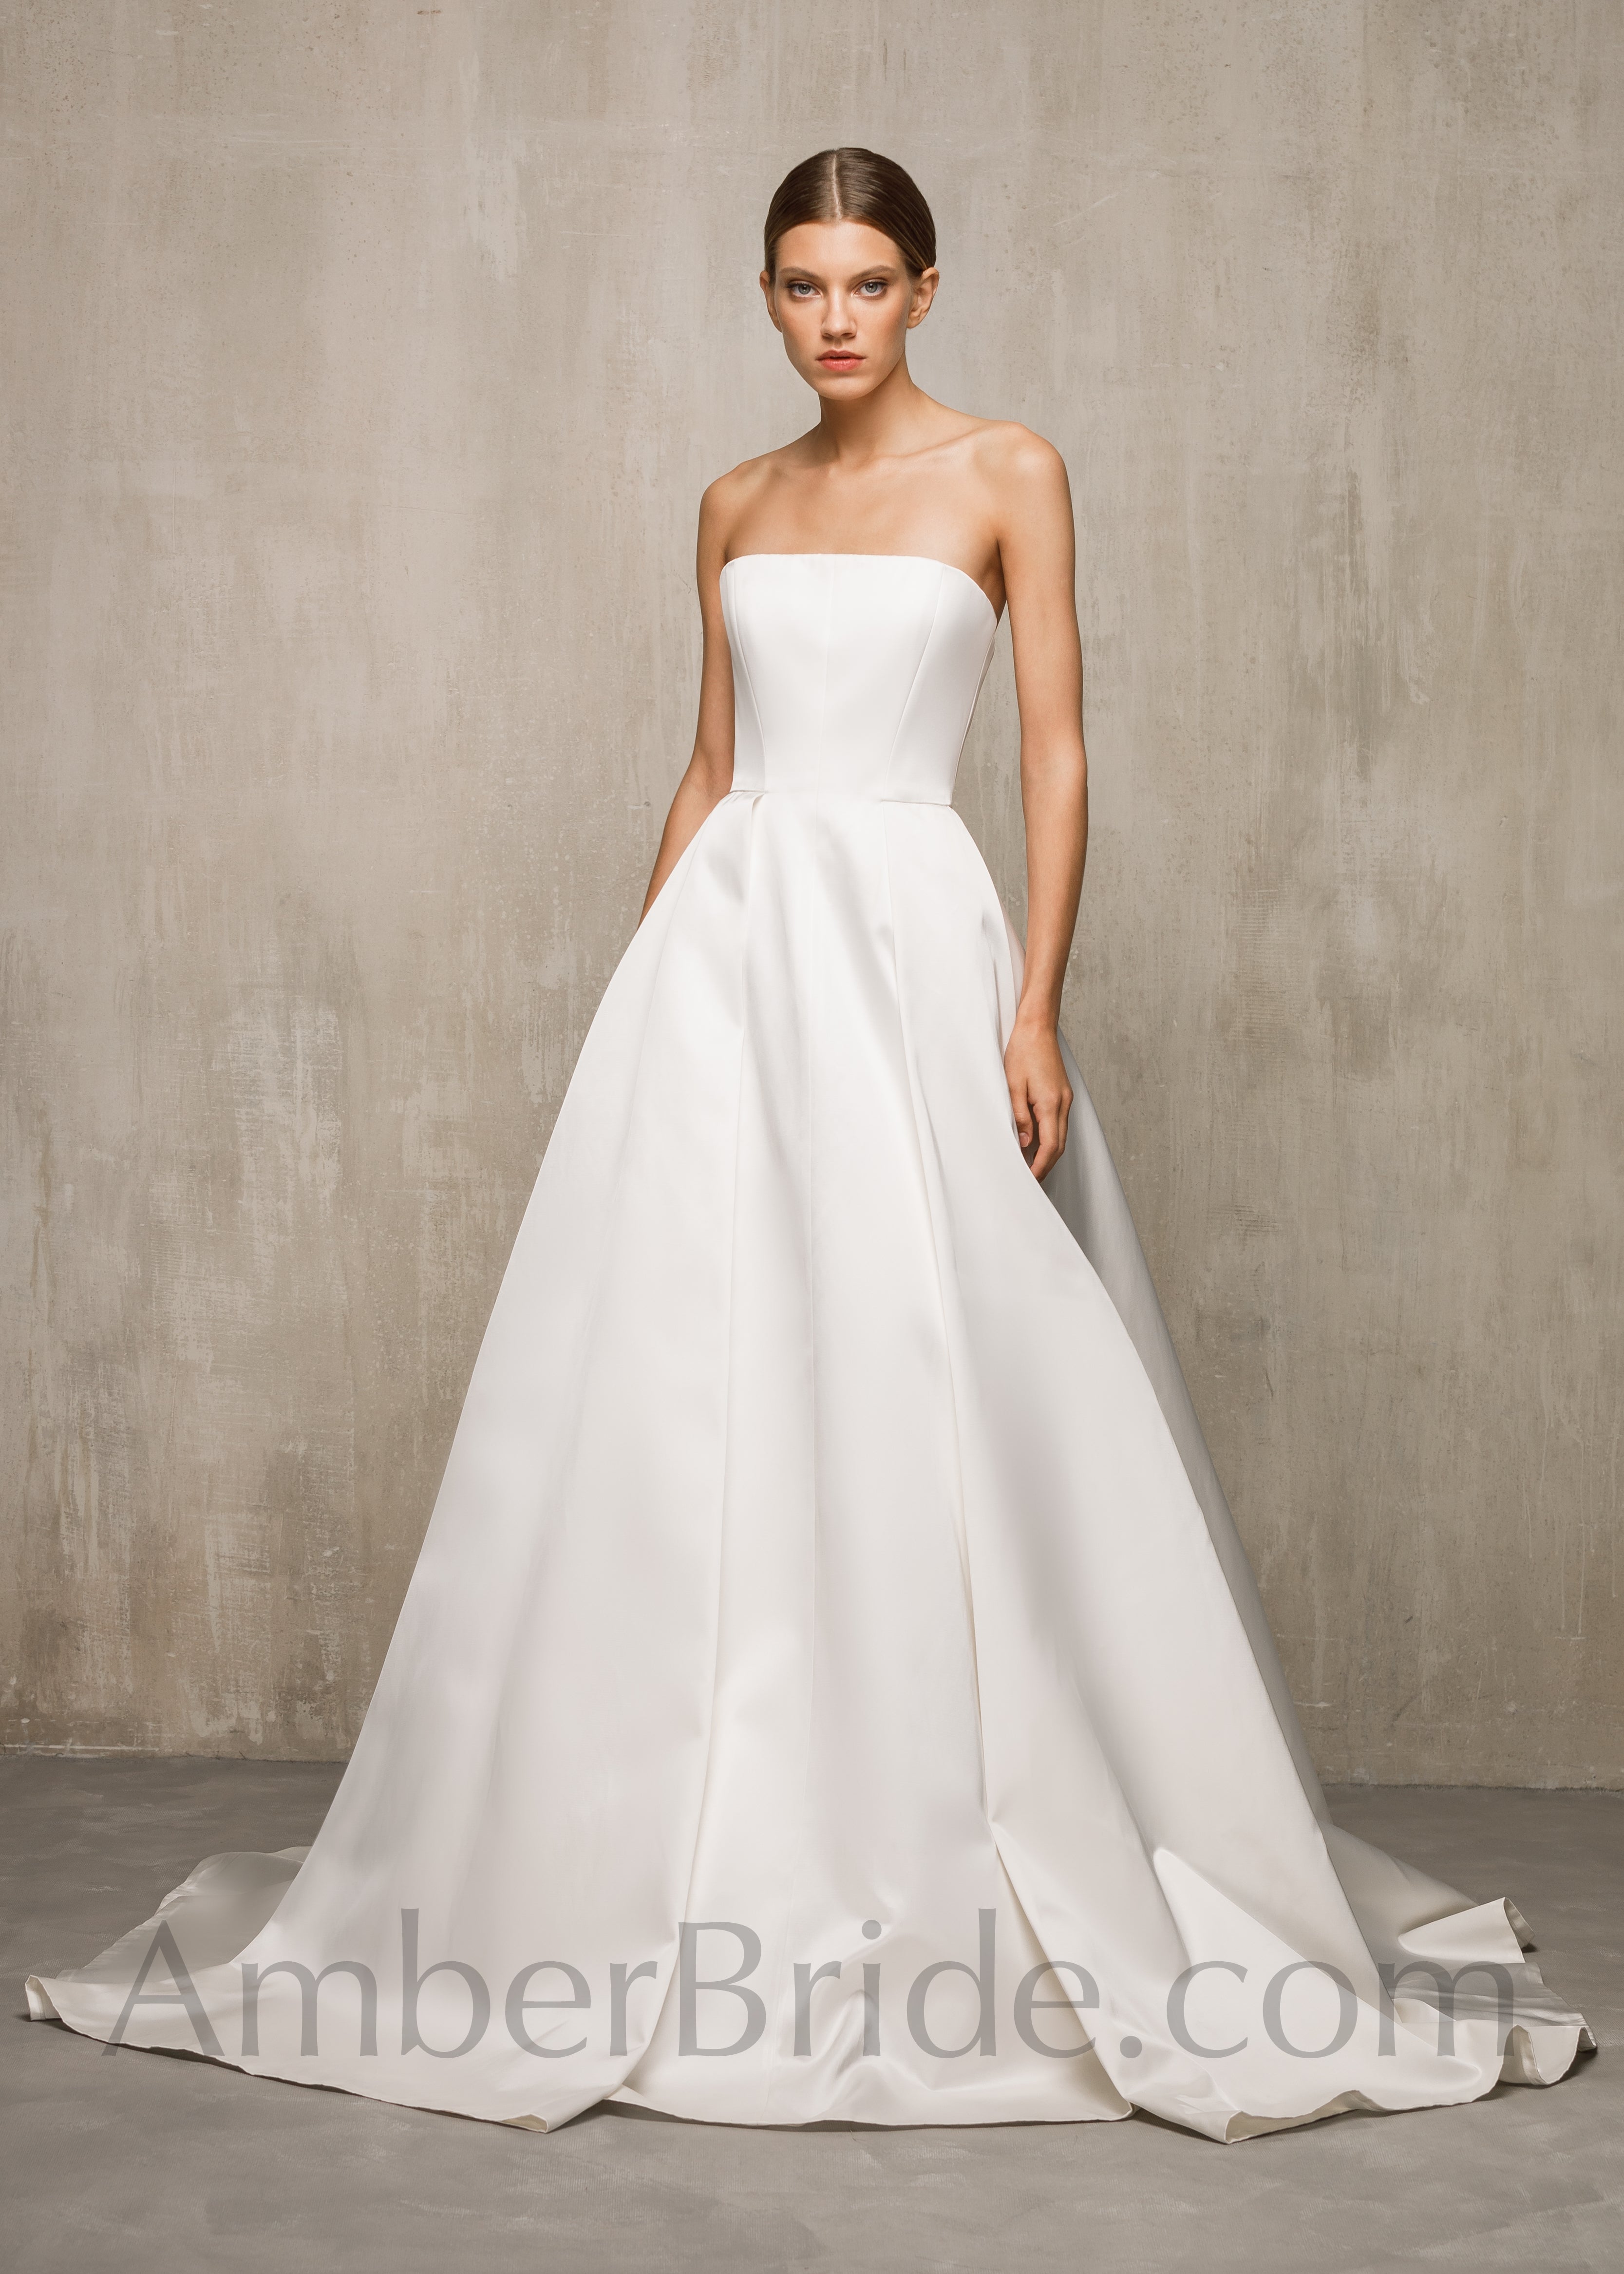 A-line Satin White Bridal Dress with Straight Strapless Neckline